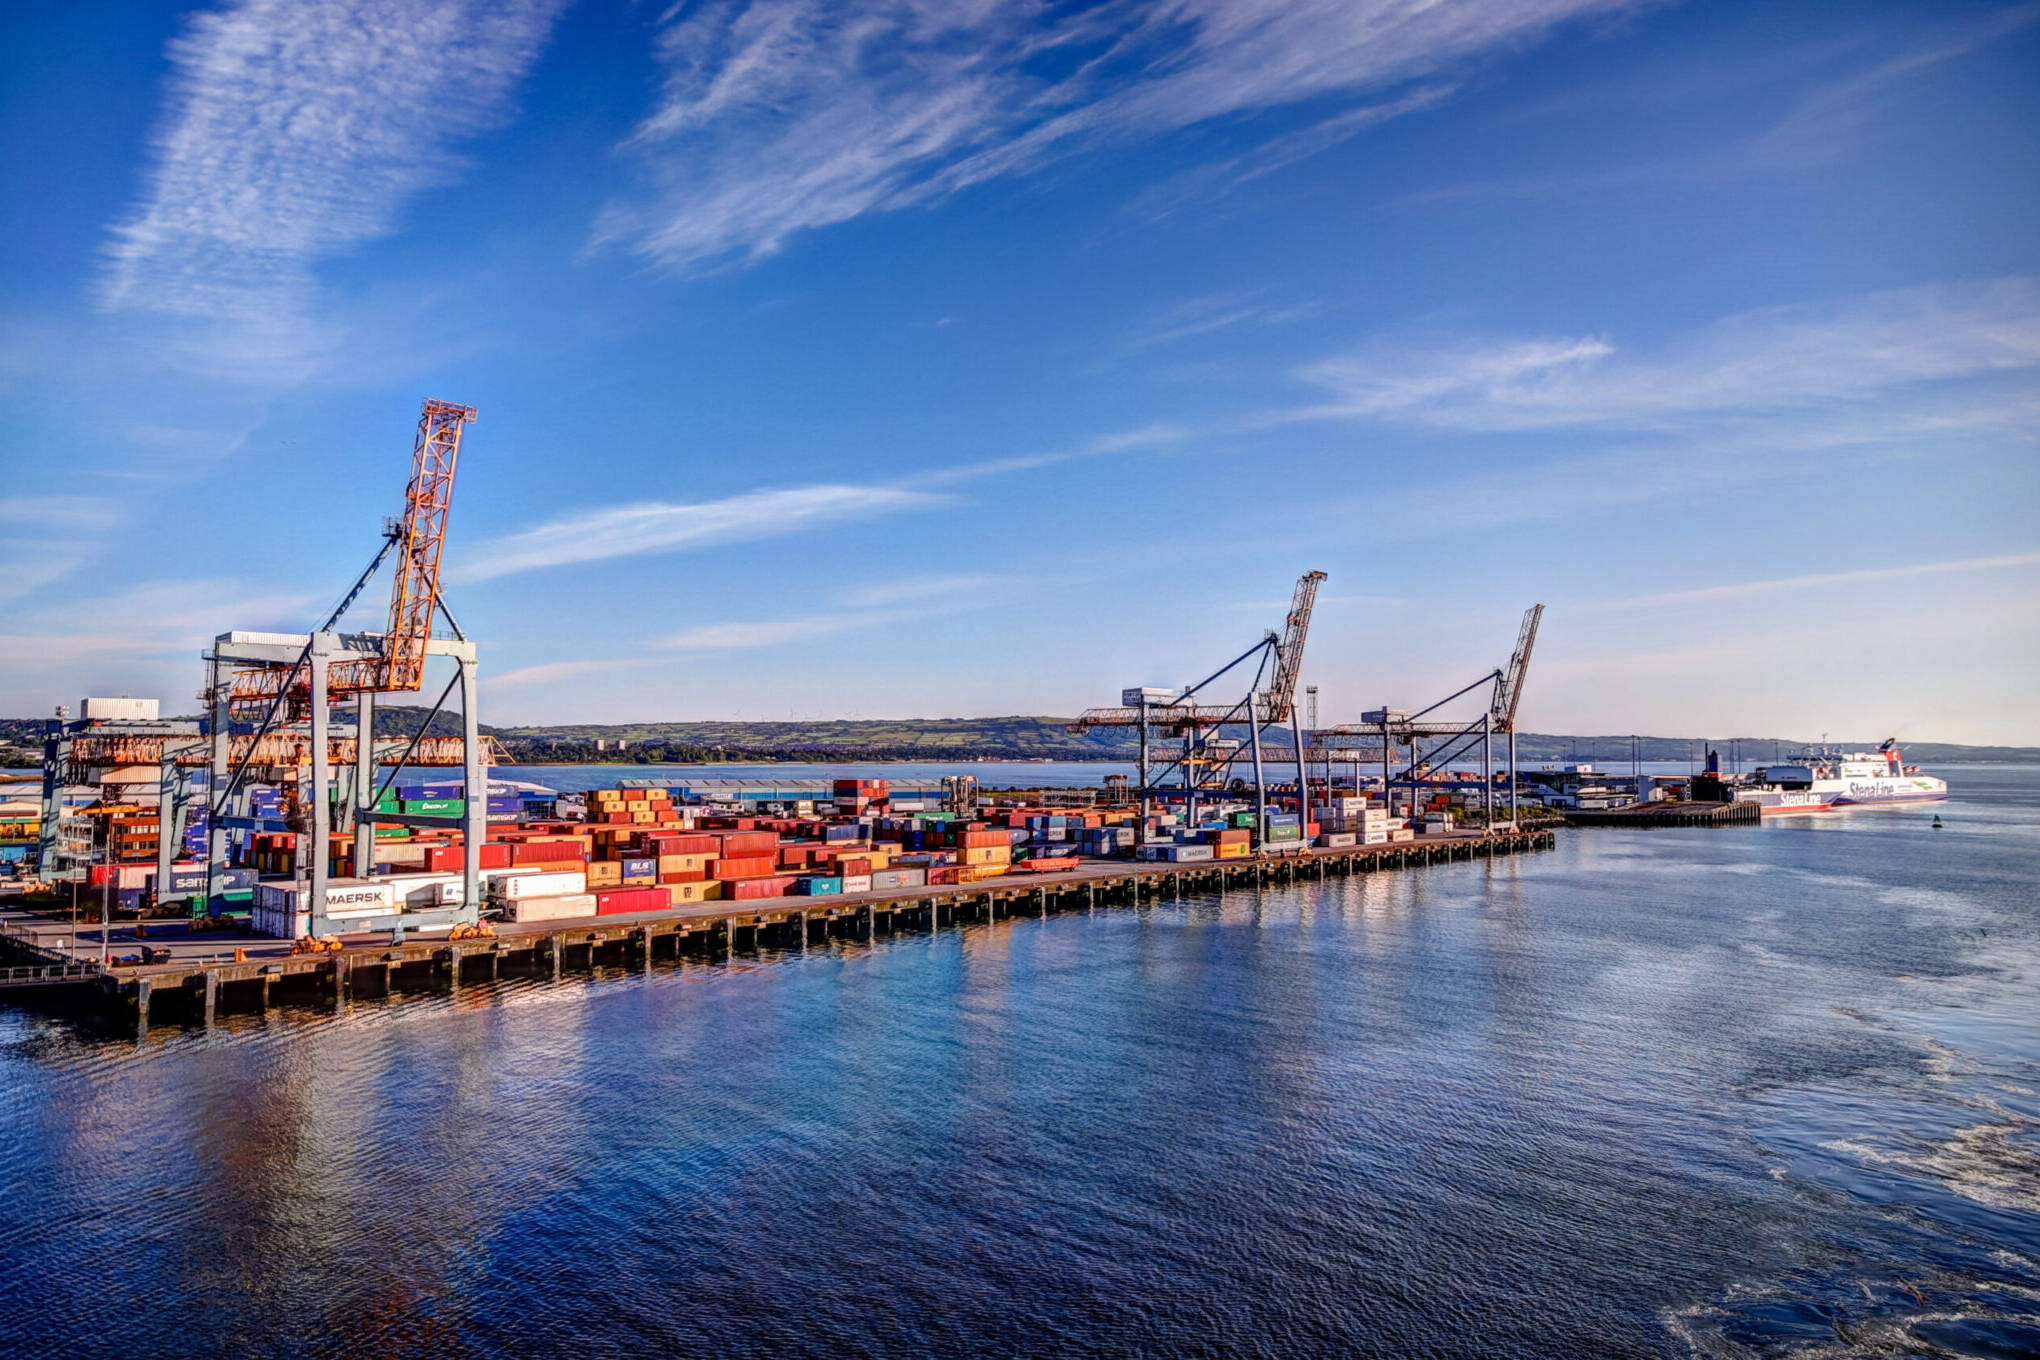 The commercial port of Belfast Ireland